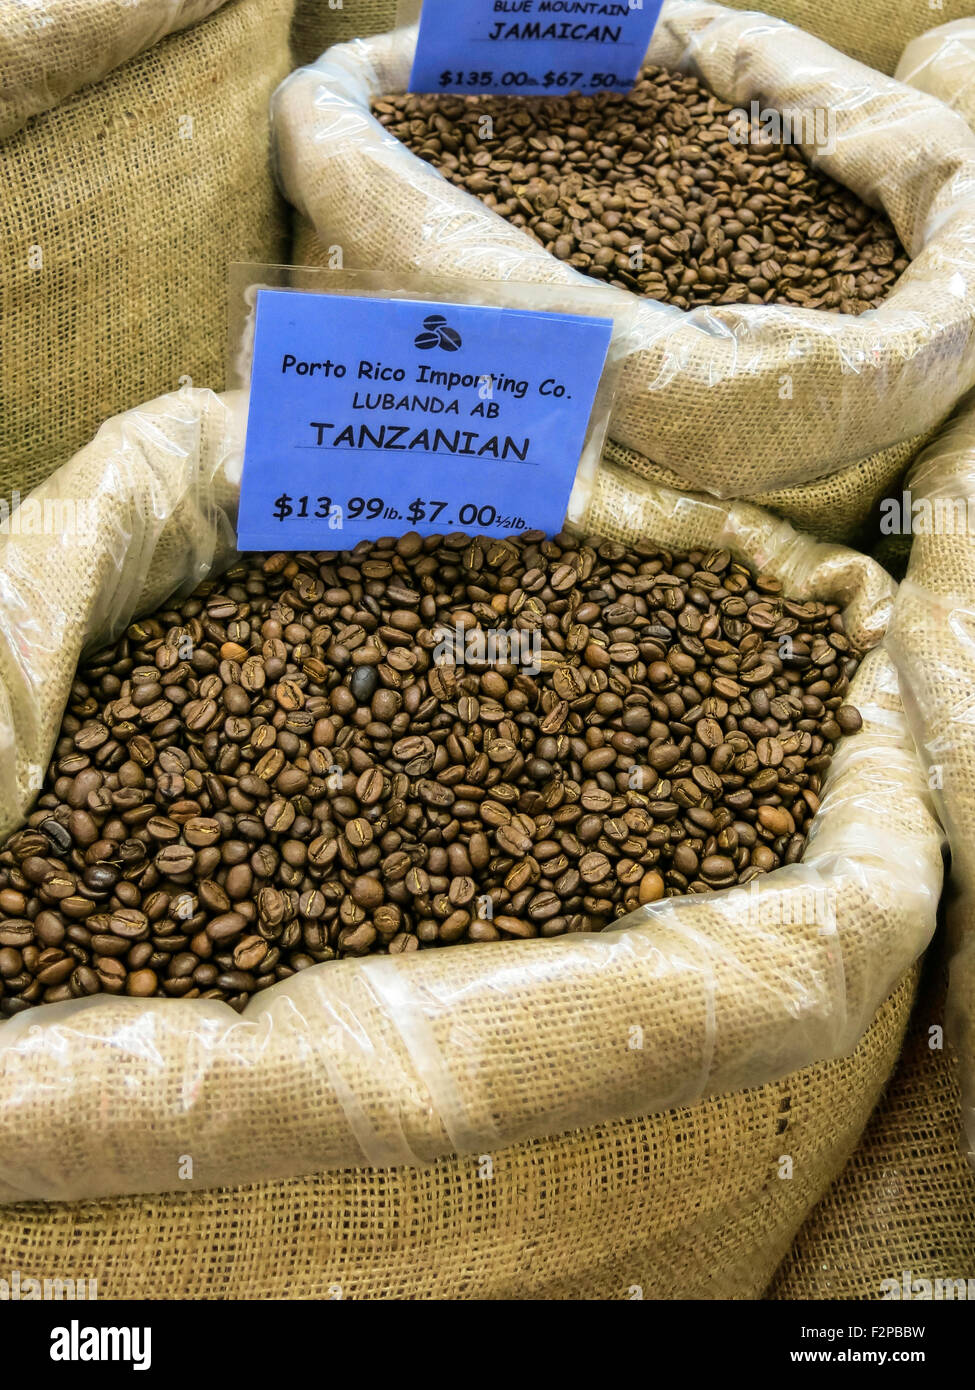 Bulk Self-Serve Bags, Jamaican and Tanzanian Coffee Beans, Porto Rico Importing Co., NYC, USA Stock Photo